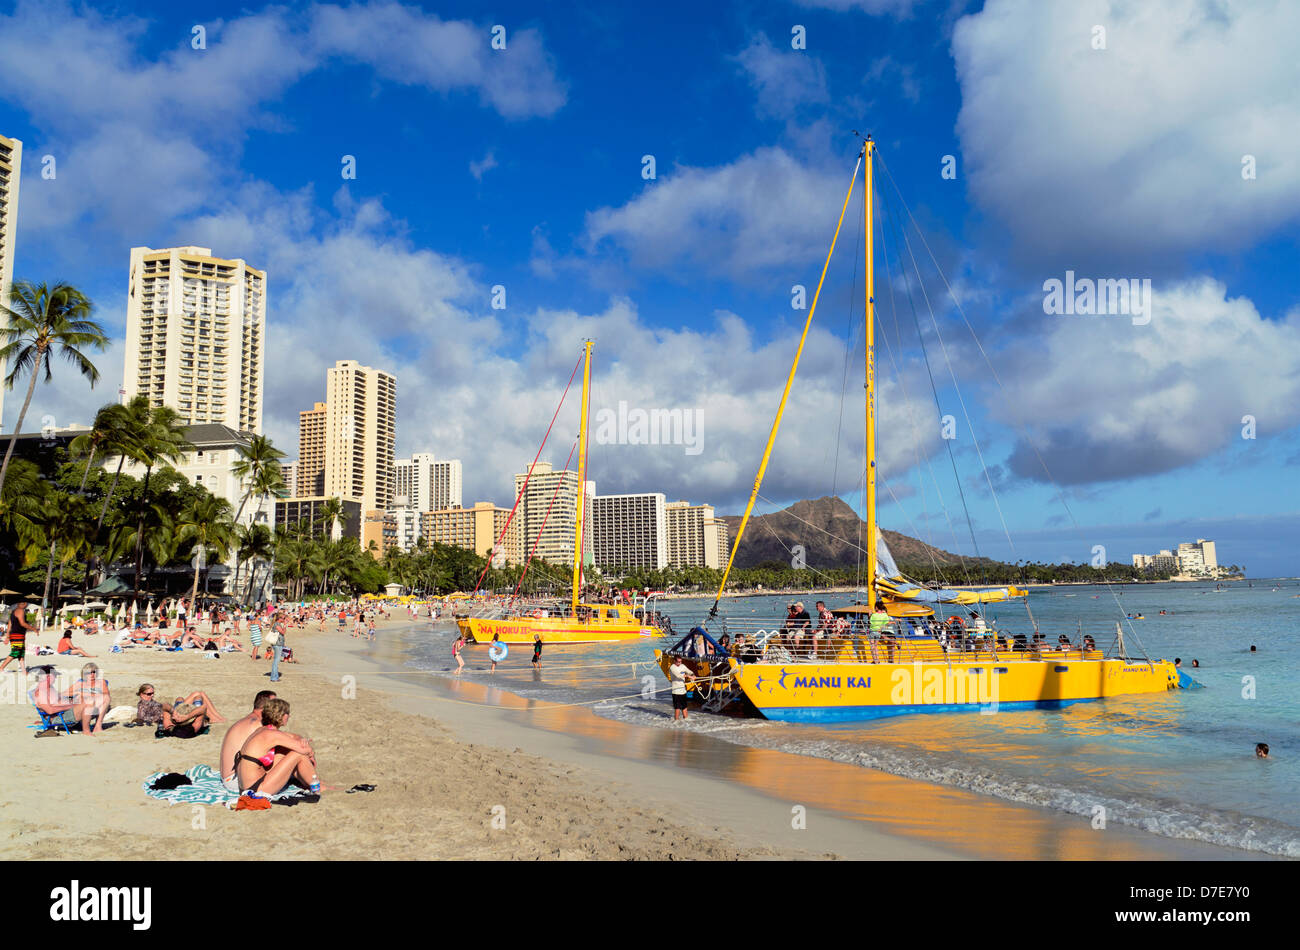 A catamaran prepares for a sunset voyage at Waikiki Beach, Oahu, Hawaii. Stock Photo